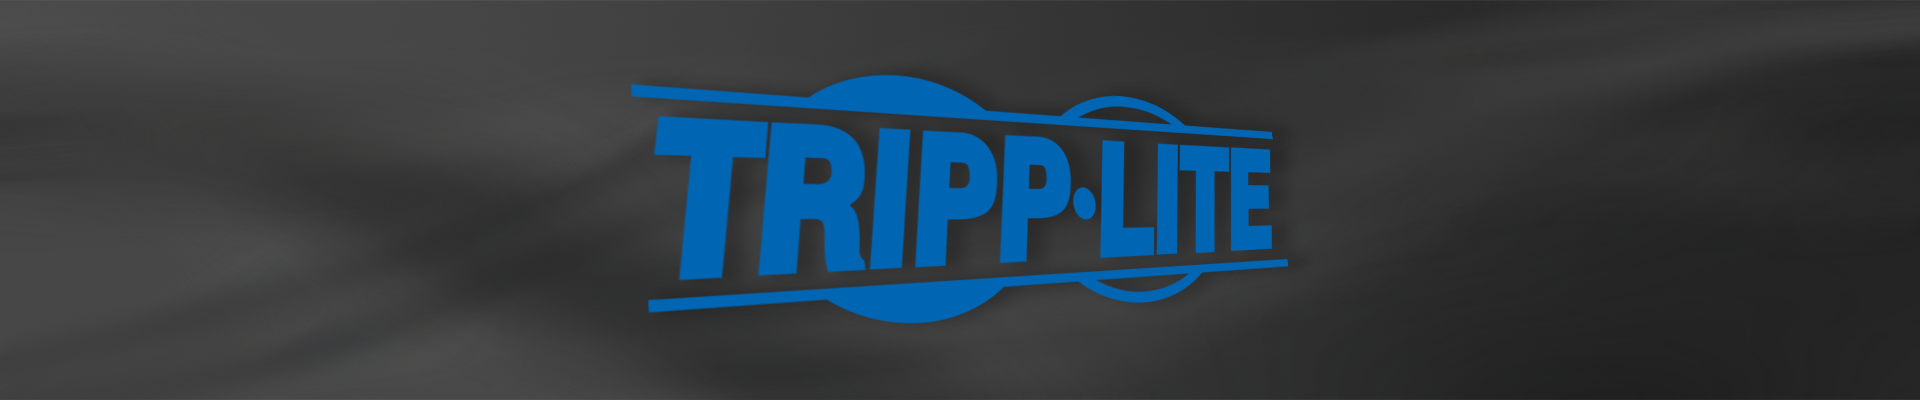 Minicom / Tripplite Banner